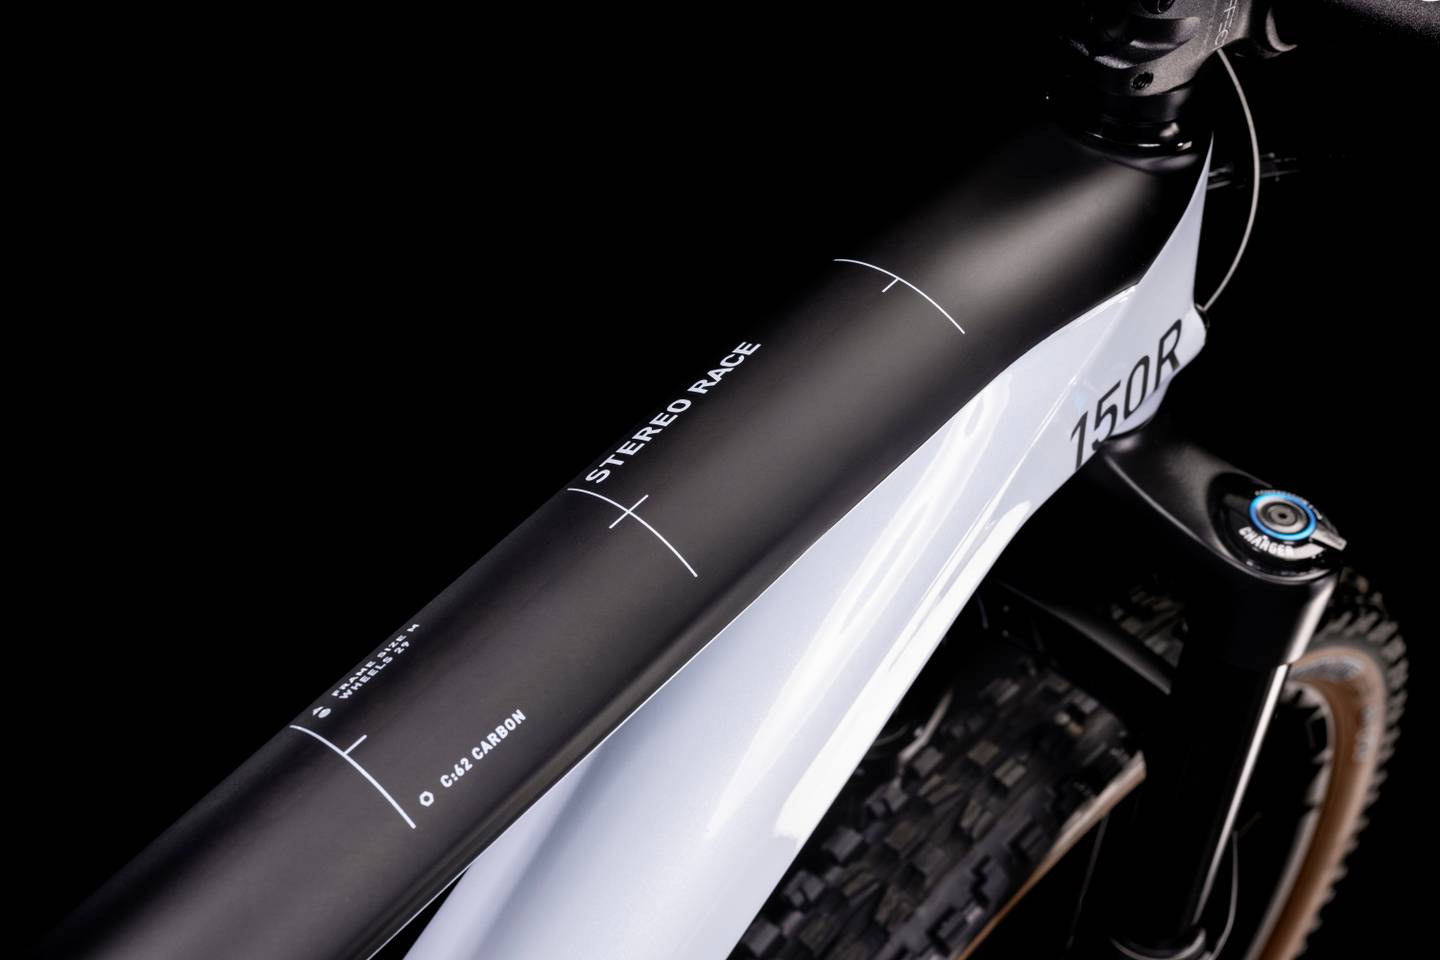 Bicicleta Stereo 150 C62 Race 2022